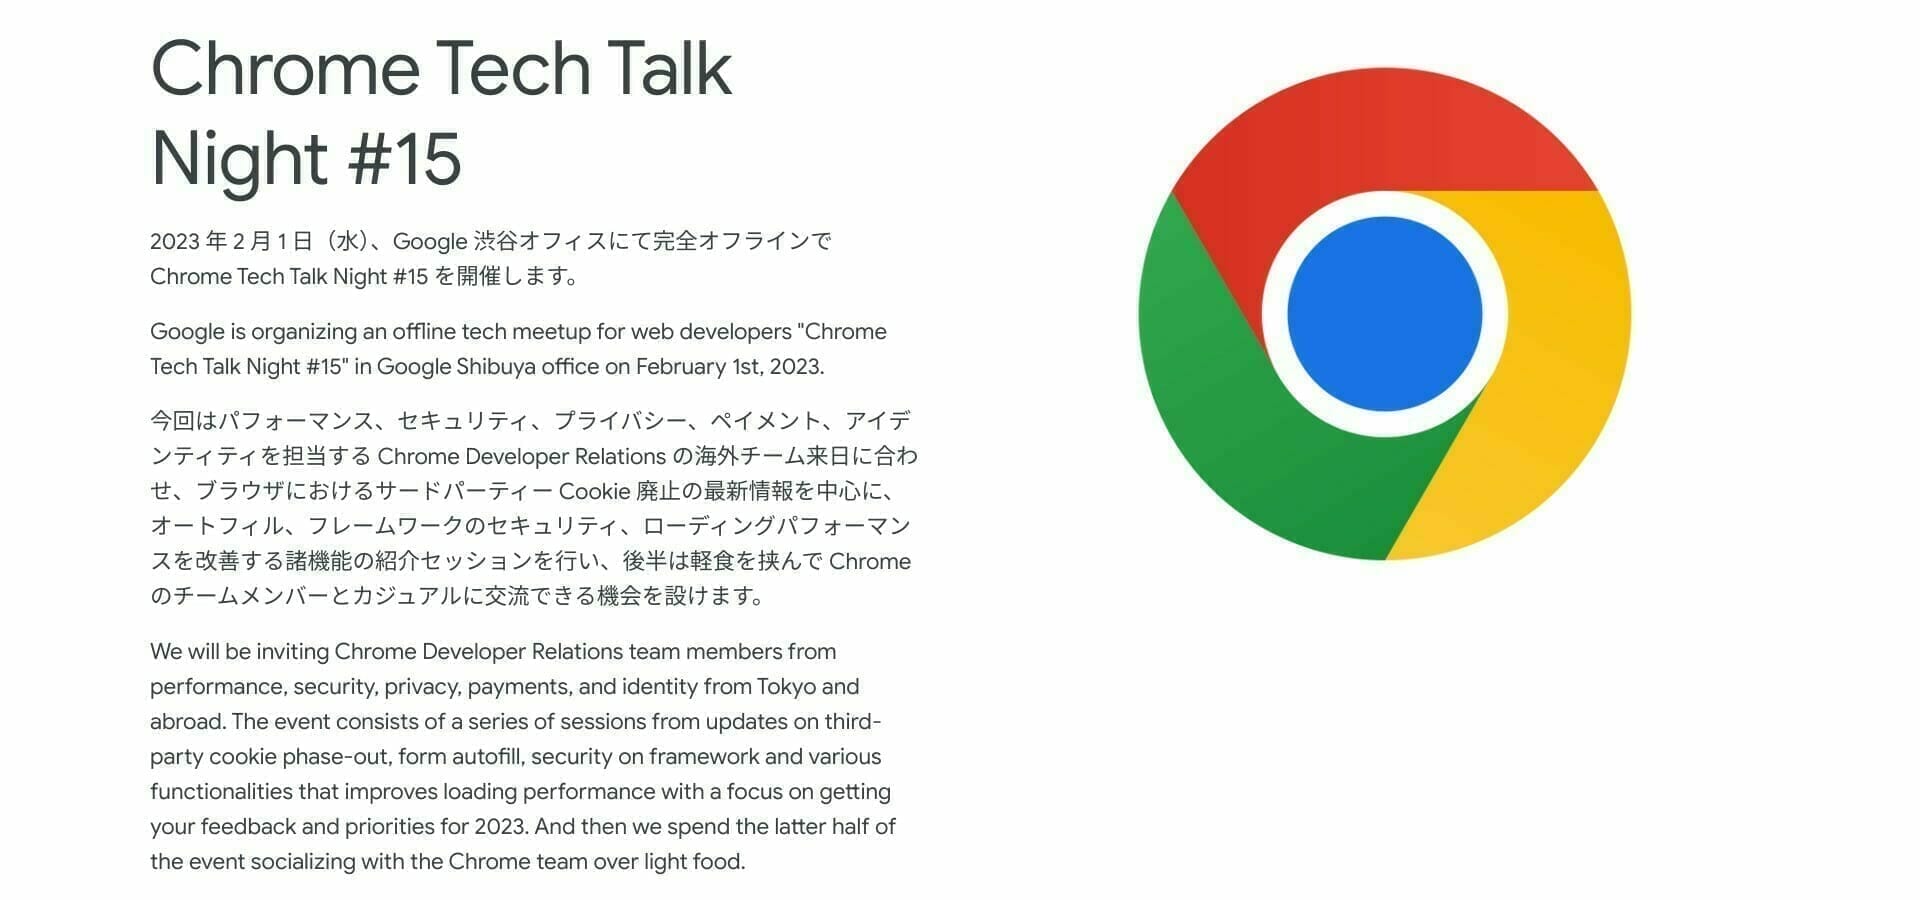 [Google] Chrome Tech Talk Night #15